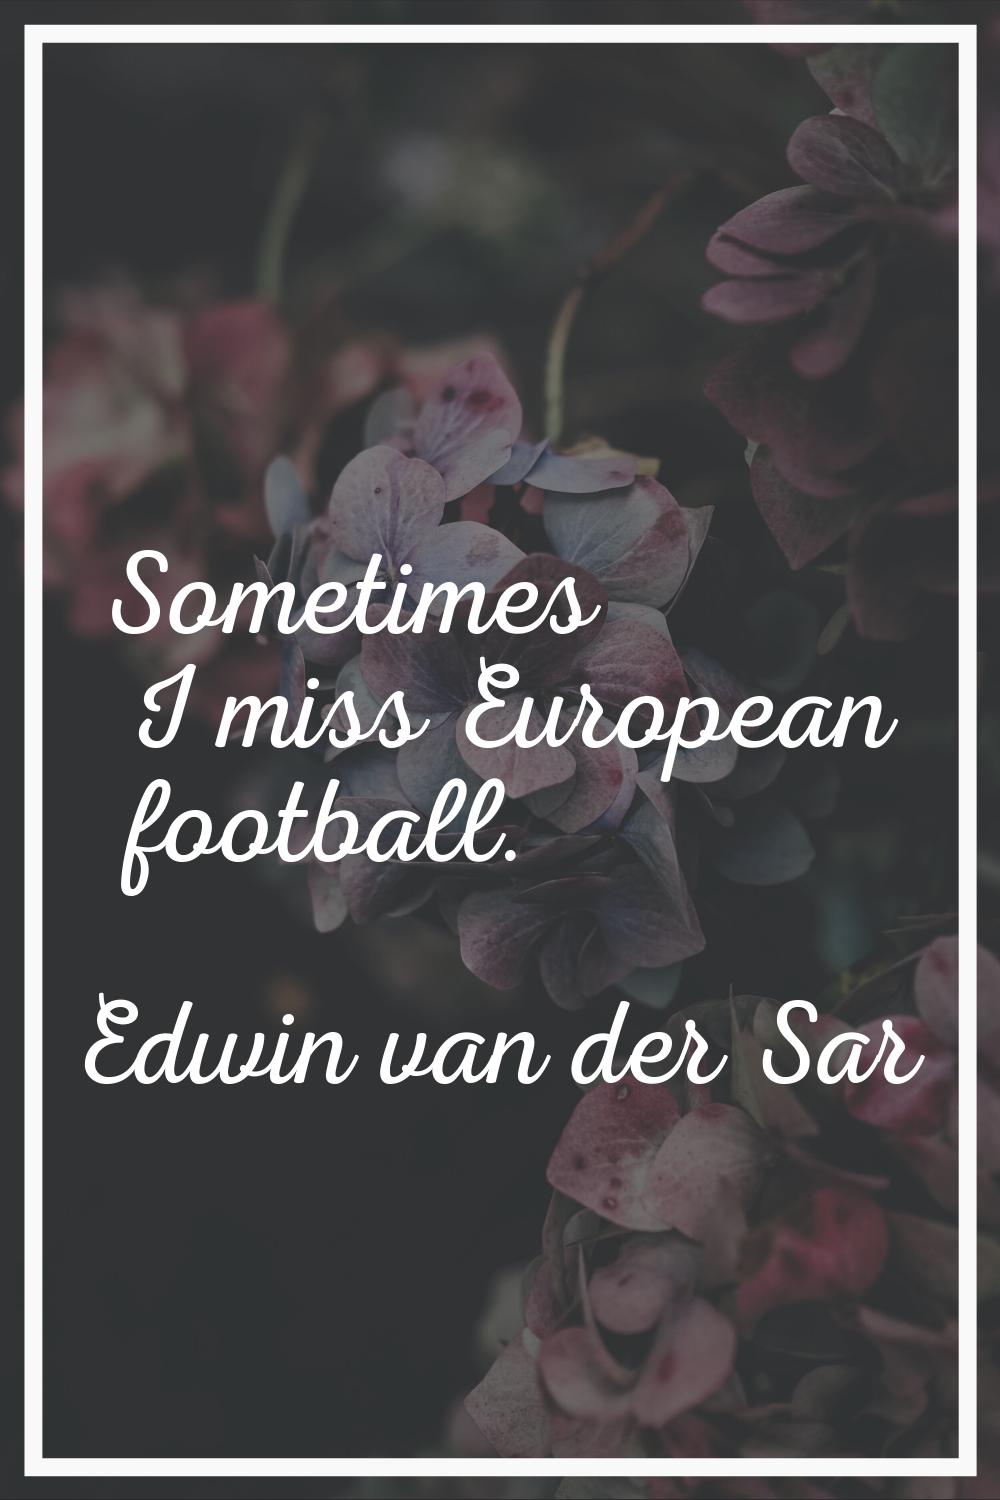 Sometimes I miss European football.